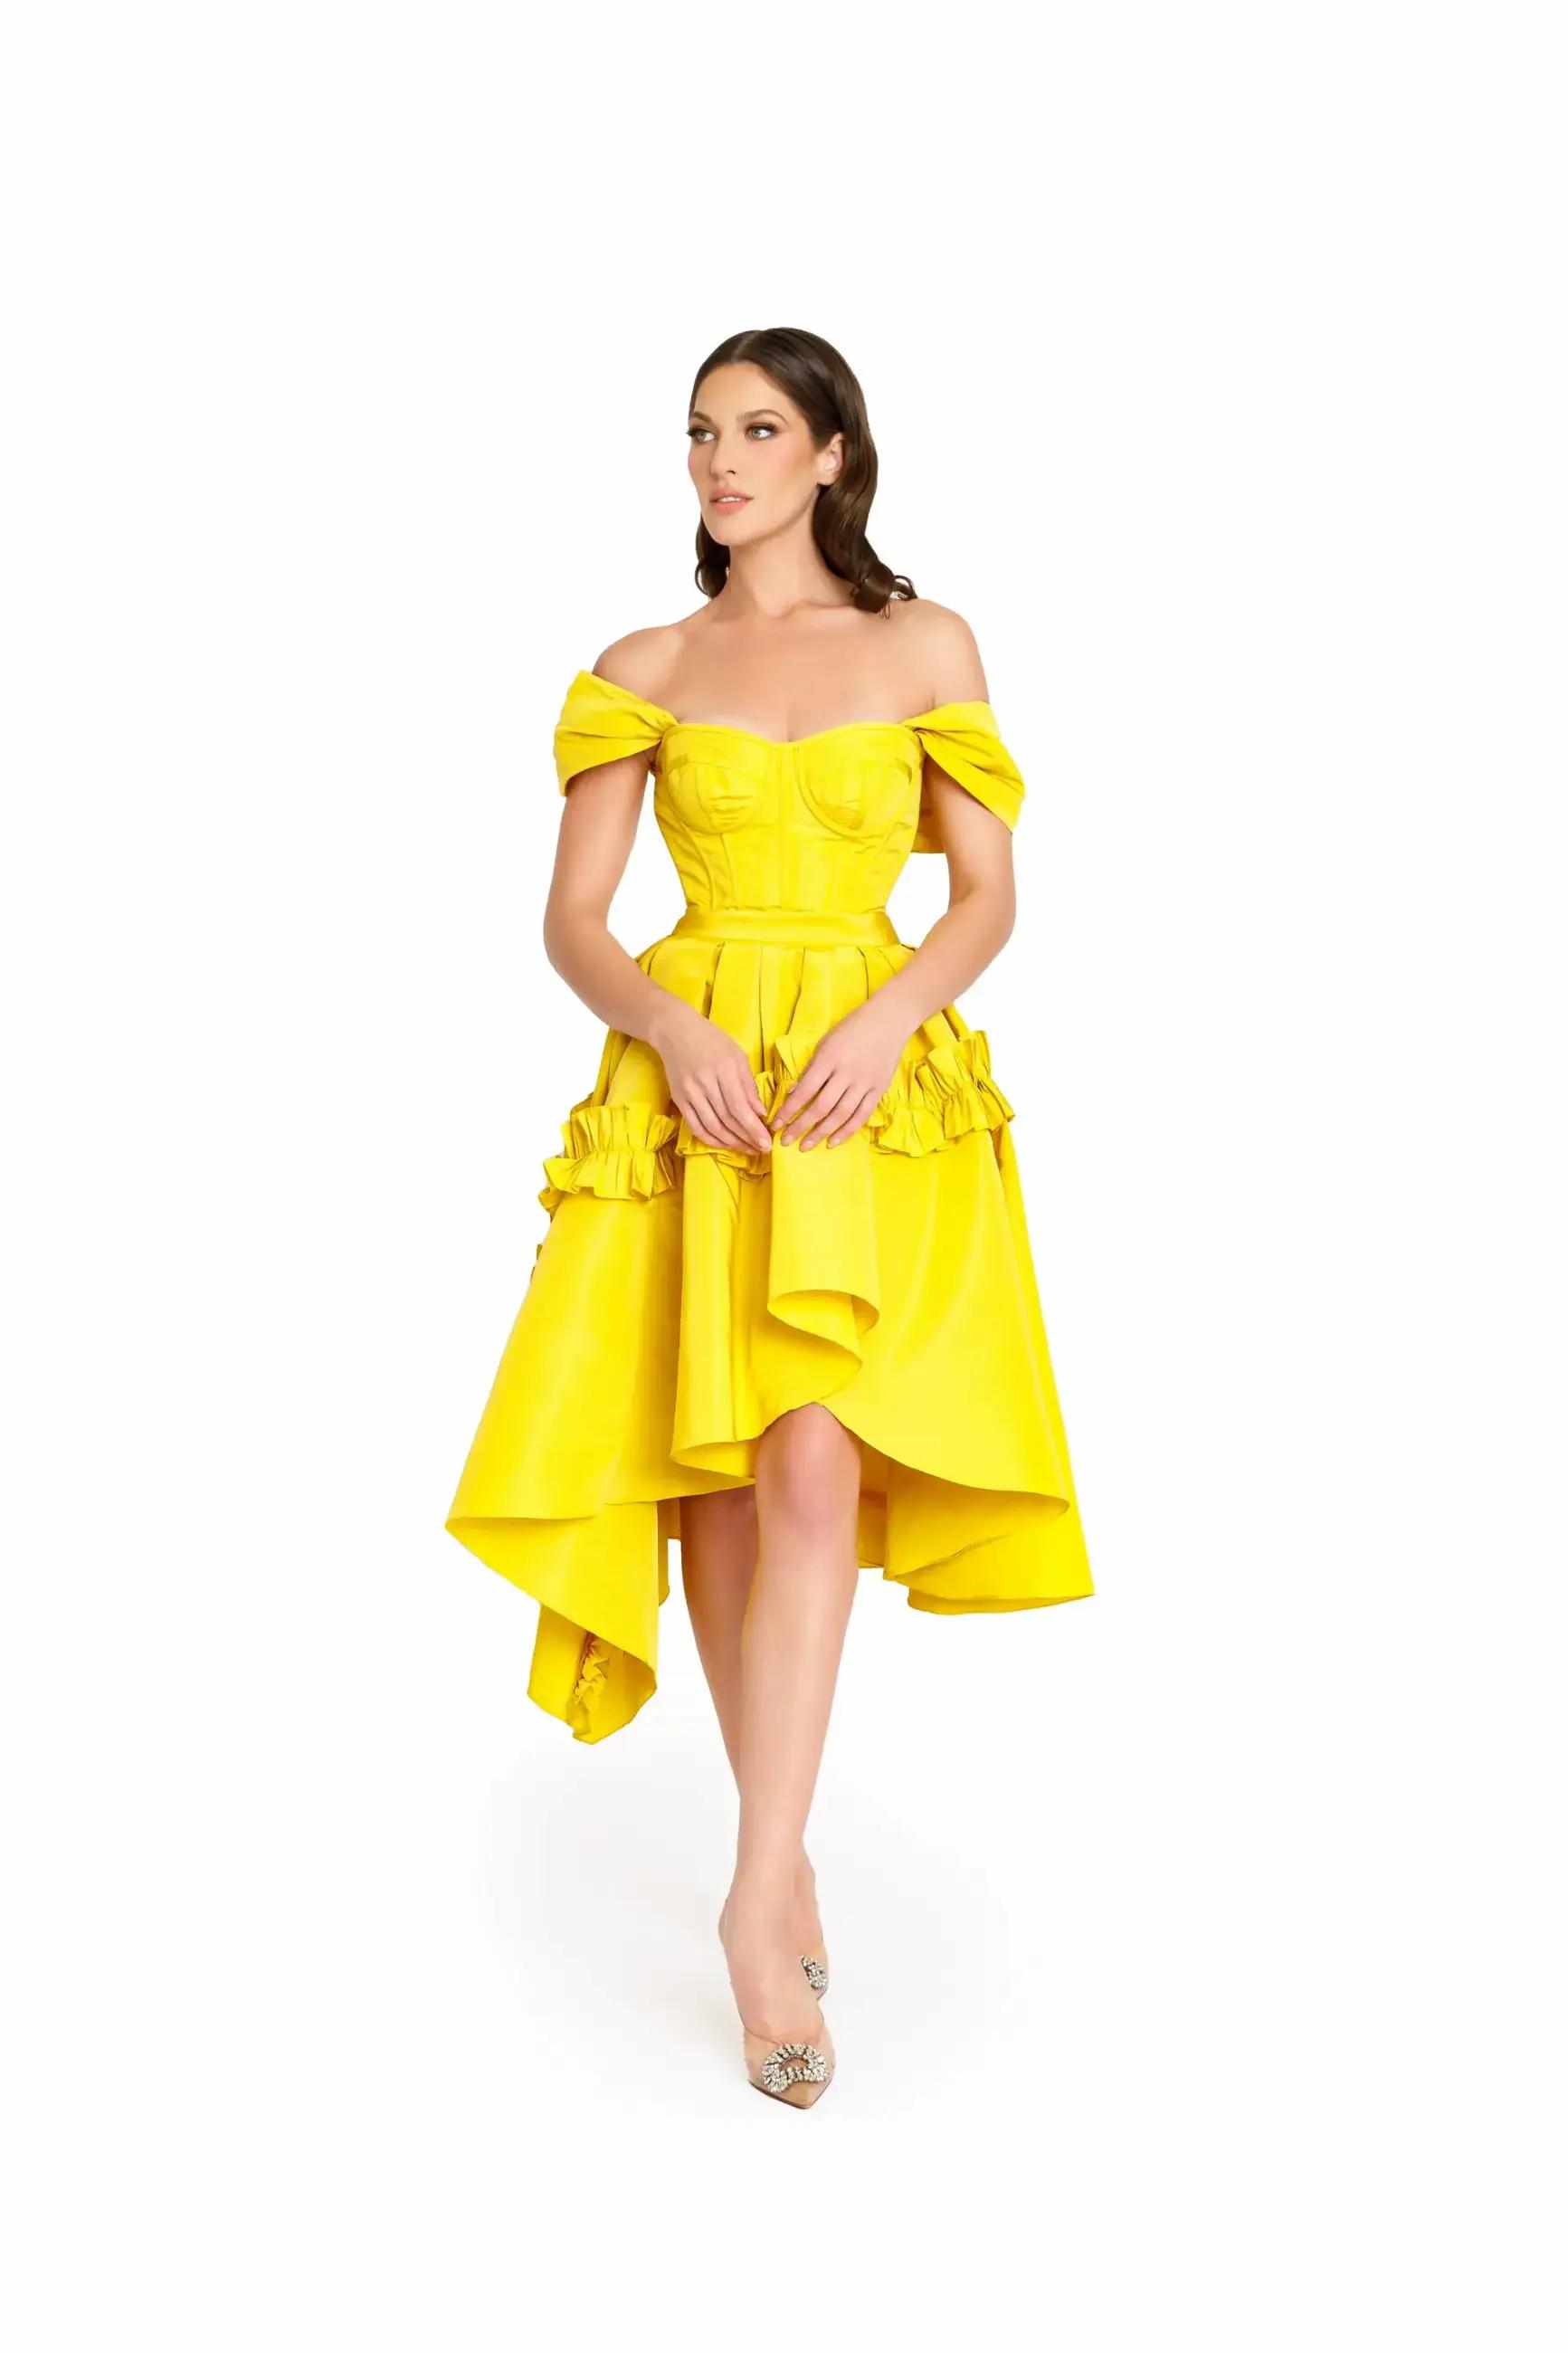 Model wearing a yellow evening dress